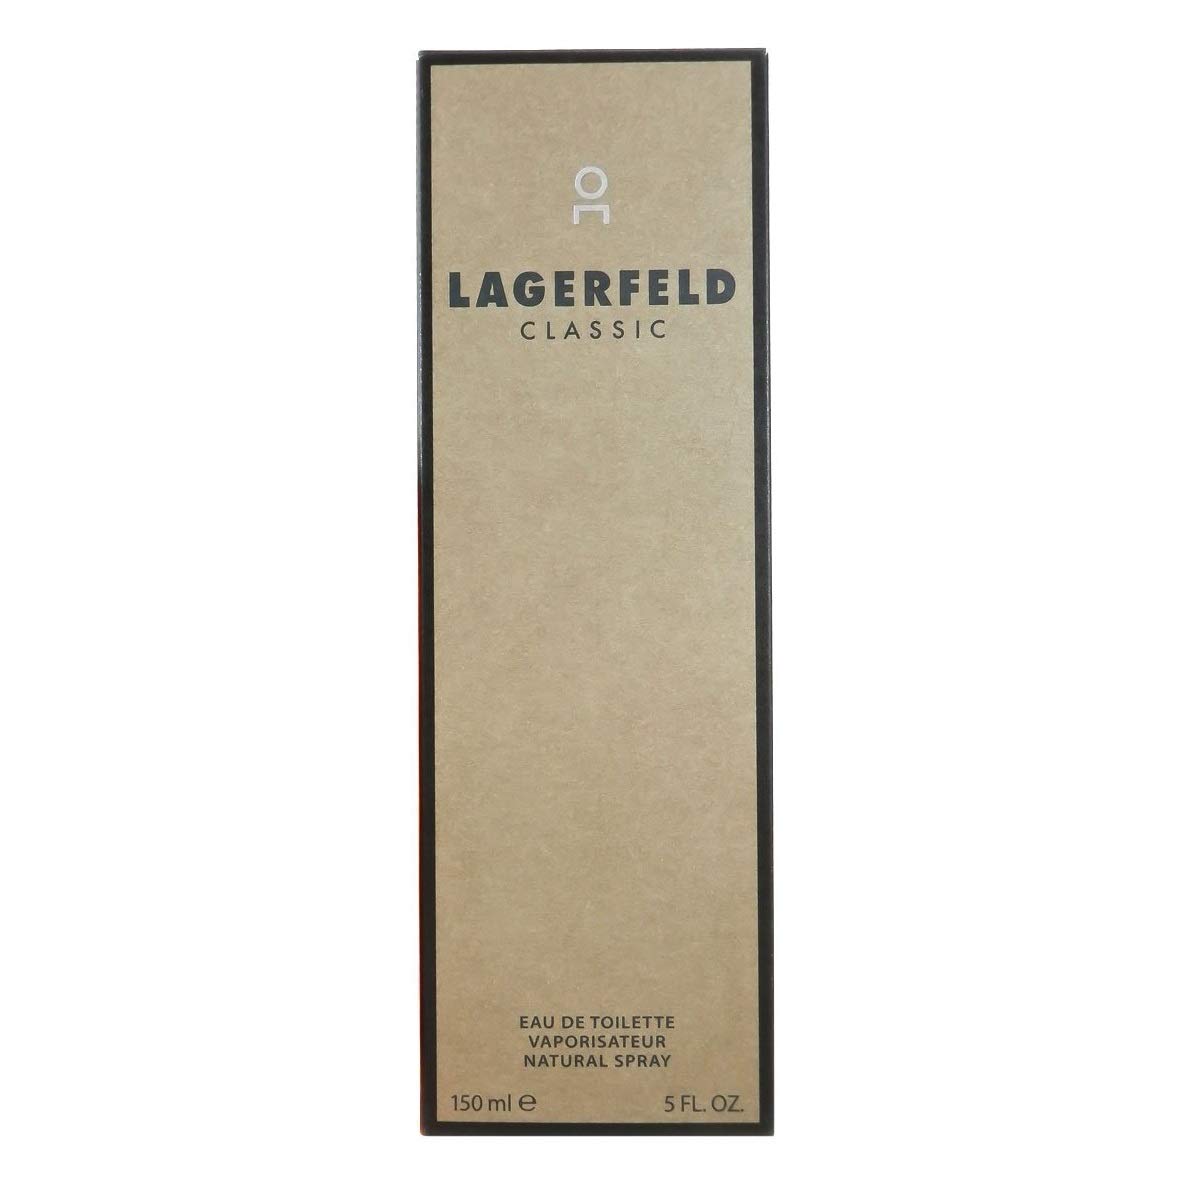 KARL LAGERFELD Classic for Men Eau de Toilette Spray, 5 Ounce